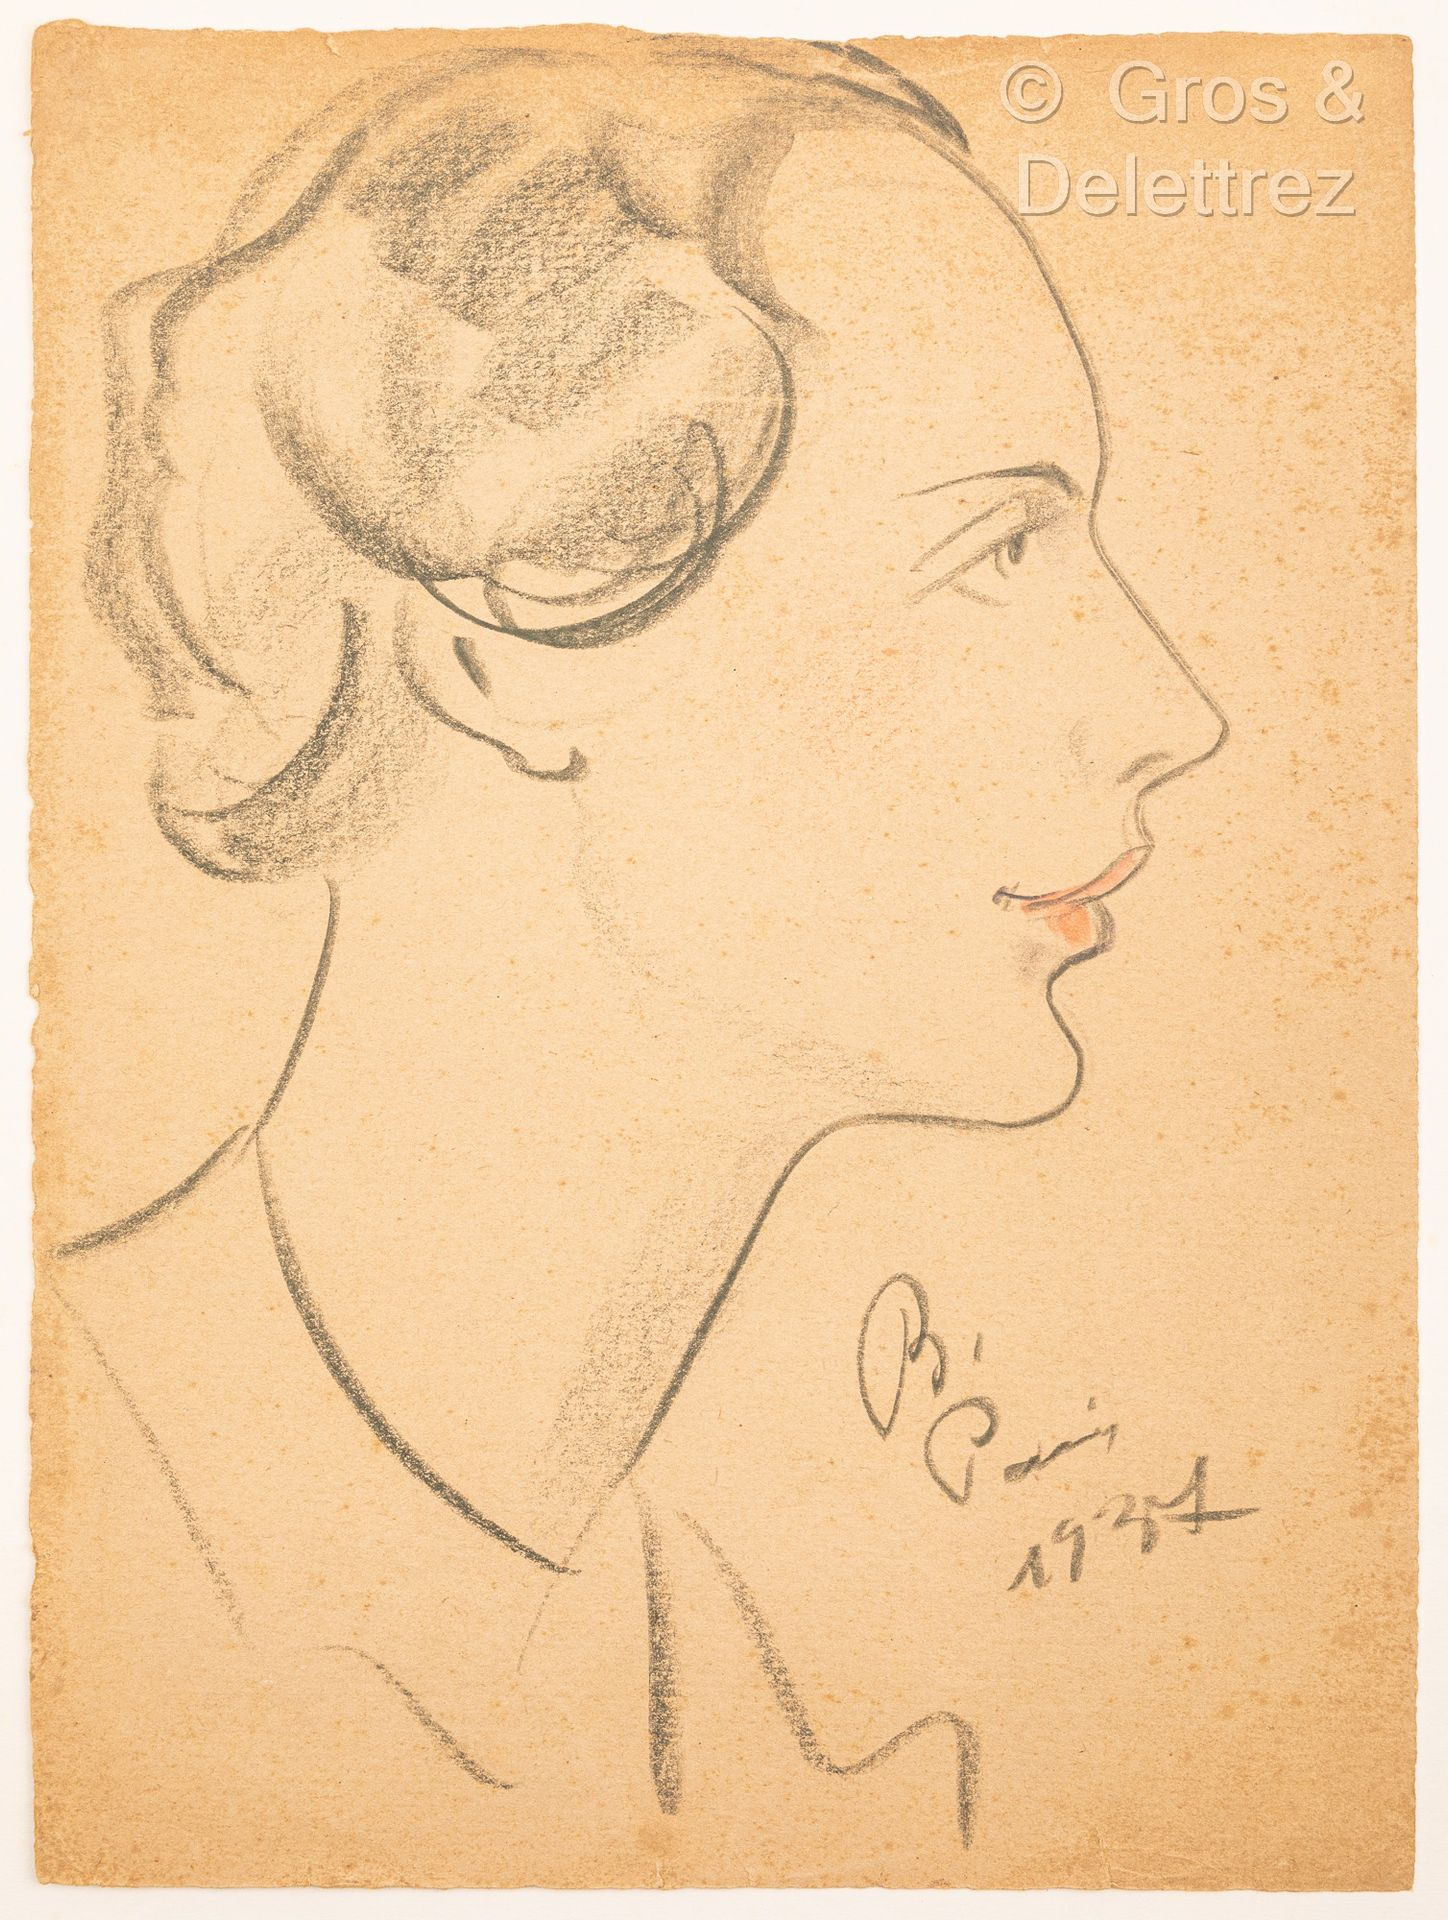 Null 现代学校
一个优雅的女人的形象
纸上素描和粉彩，有B字样，日期为1937年。
34 x 25.5厘米